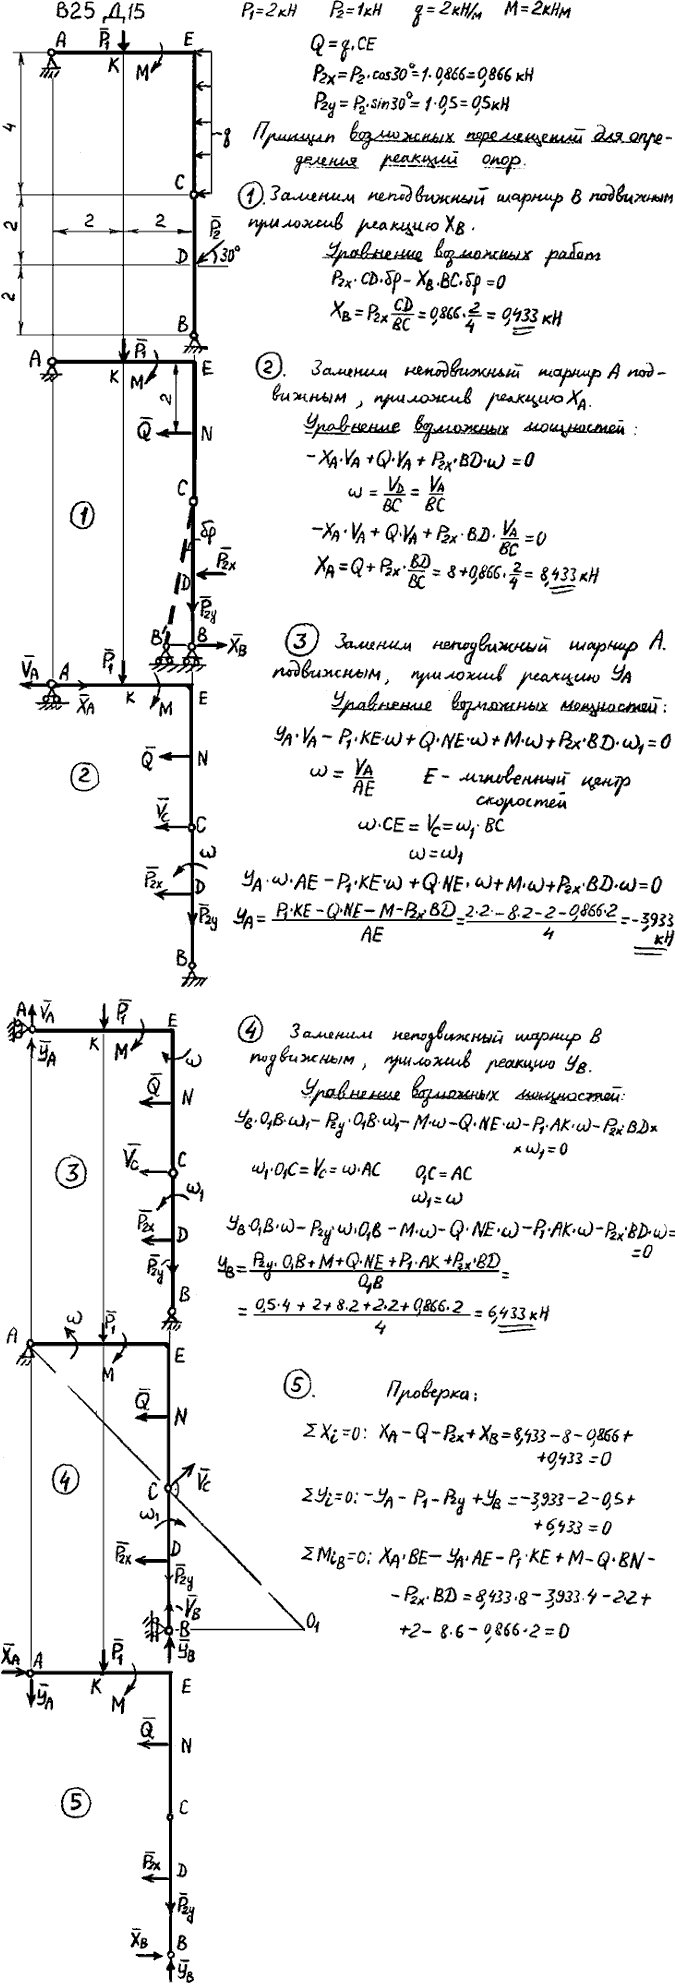 Задание Д.15 вариант 25. P1=2 кН, P2=1 кН, q=2 кН/м, M=2 кН*м